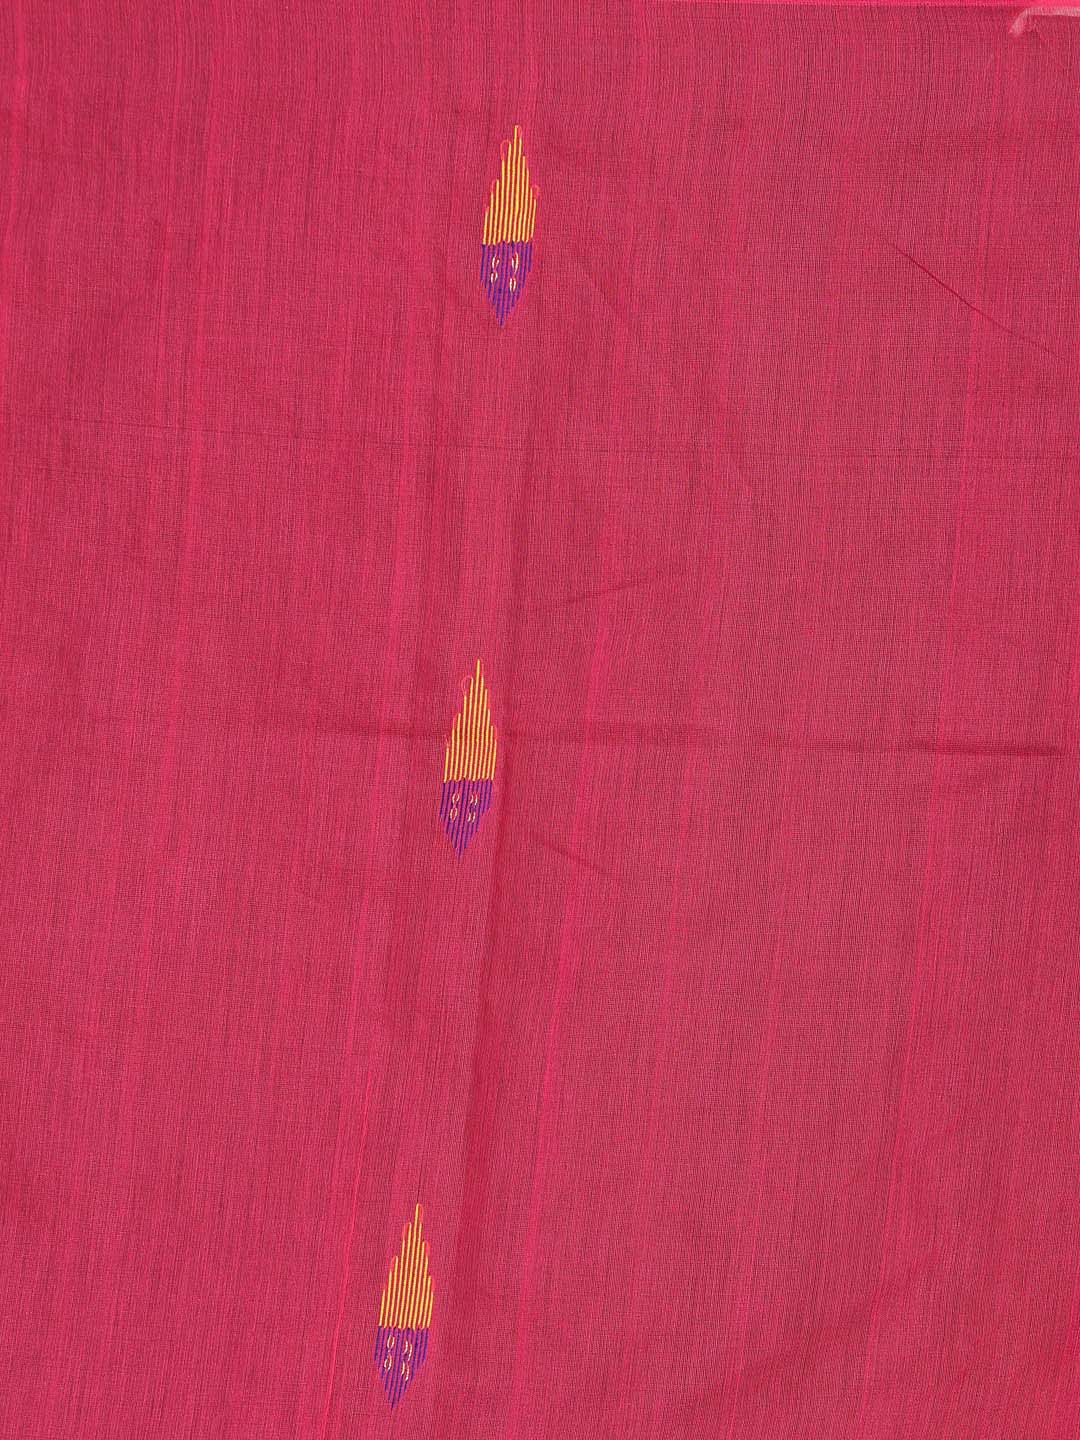 Indethnic Pink Bengal Handloom Cotton Blend Work Saree - Saree Detail View